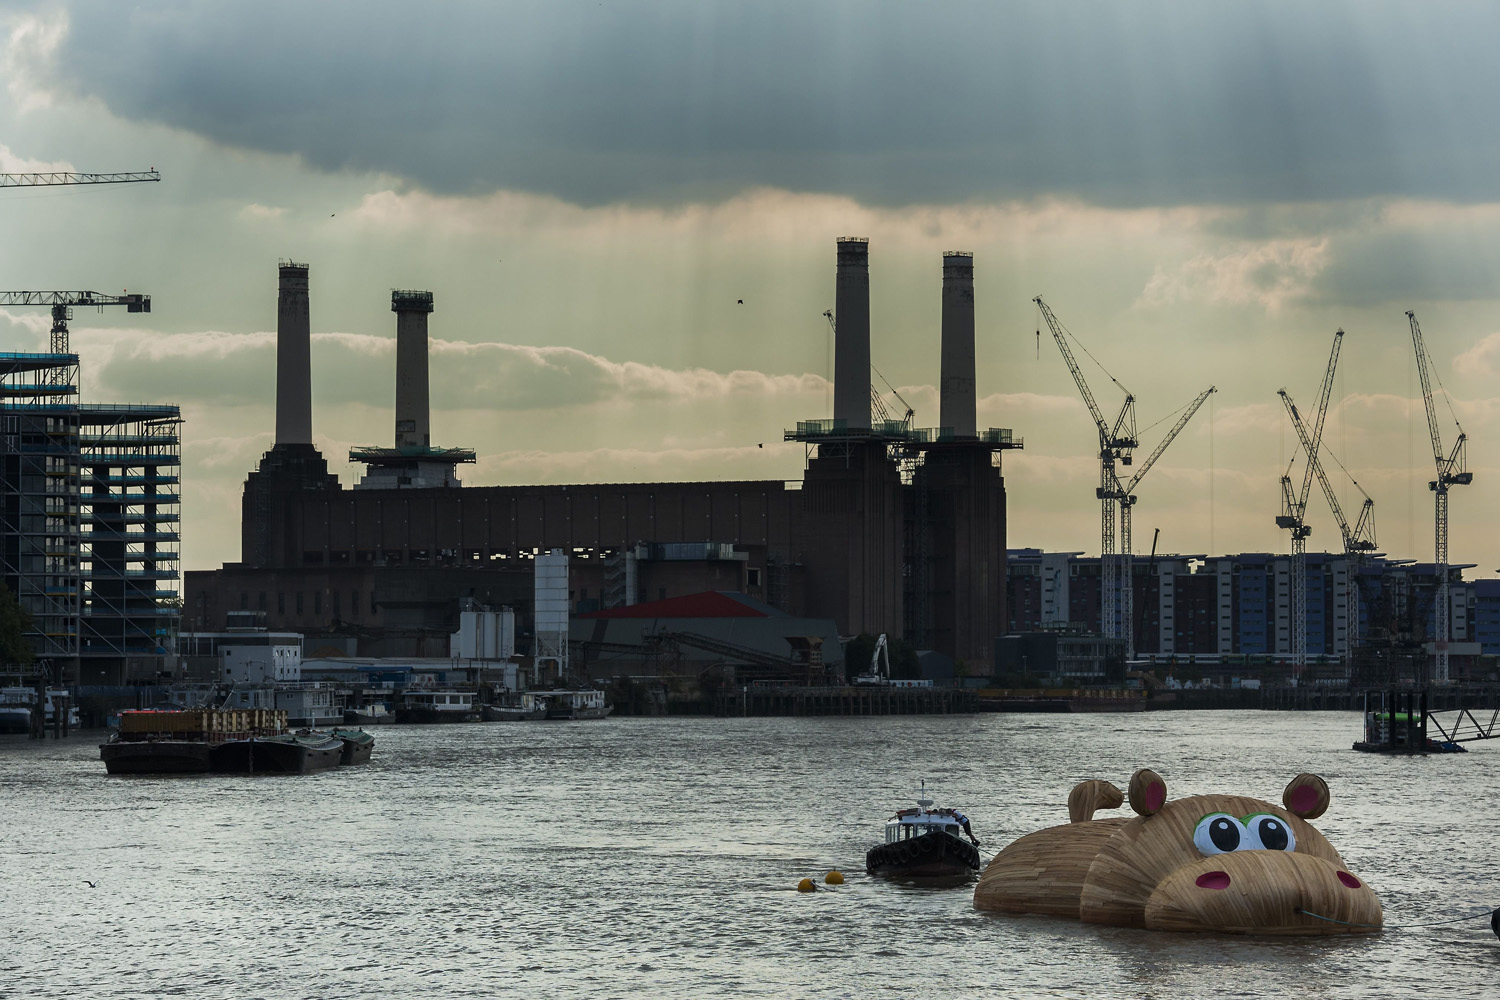 HippopoThames sculpture by Florentijn Hofman on the River Thames in London, on Sept. 2, 2014.